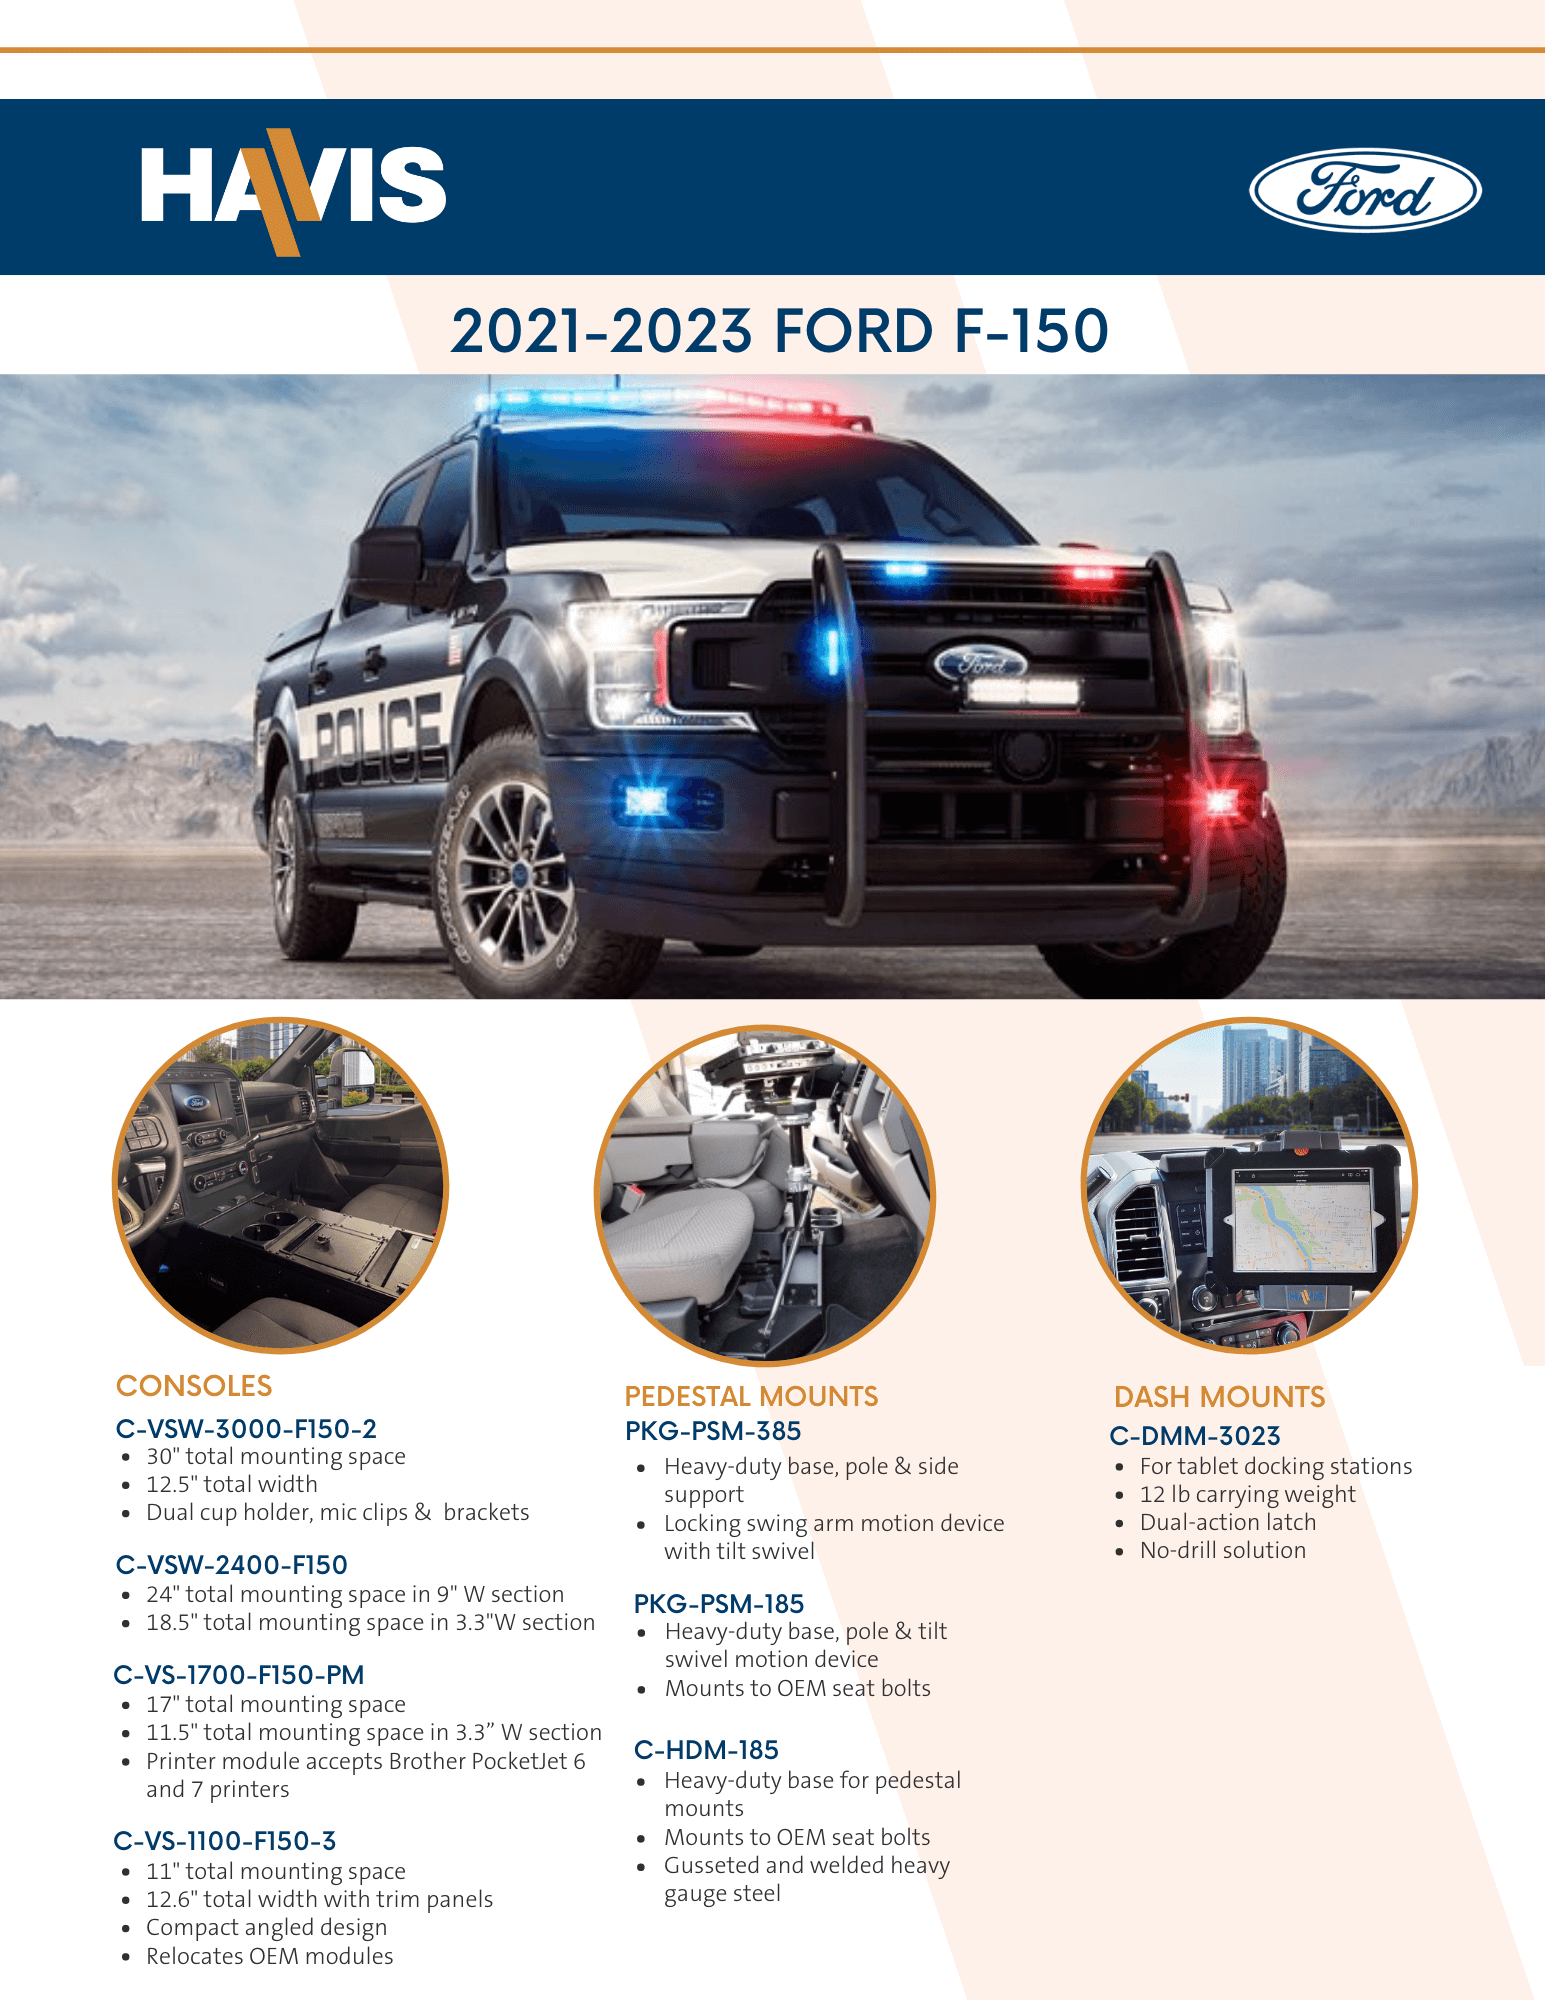 2021-2023 Ford F-150 Public Safety Teaser Sheet